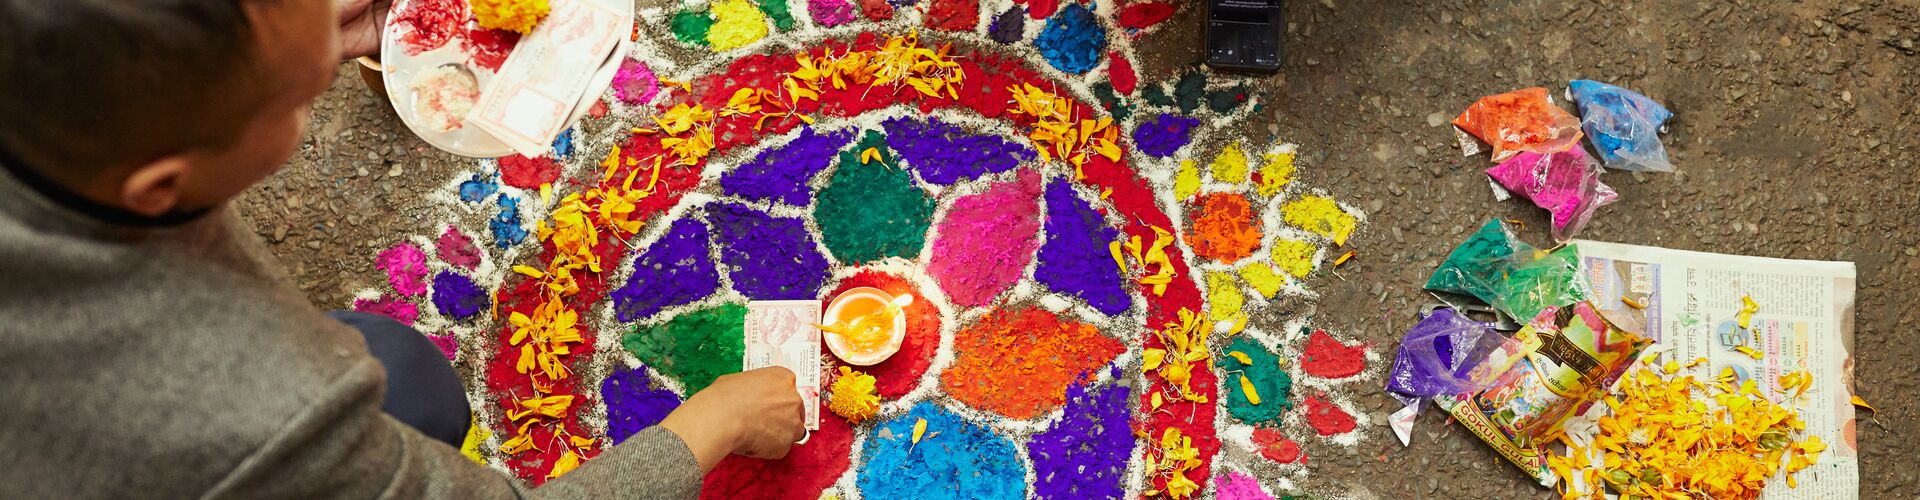 Locals creating a colorful mandala on the street in Kathmandu, Nepal